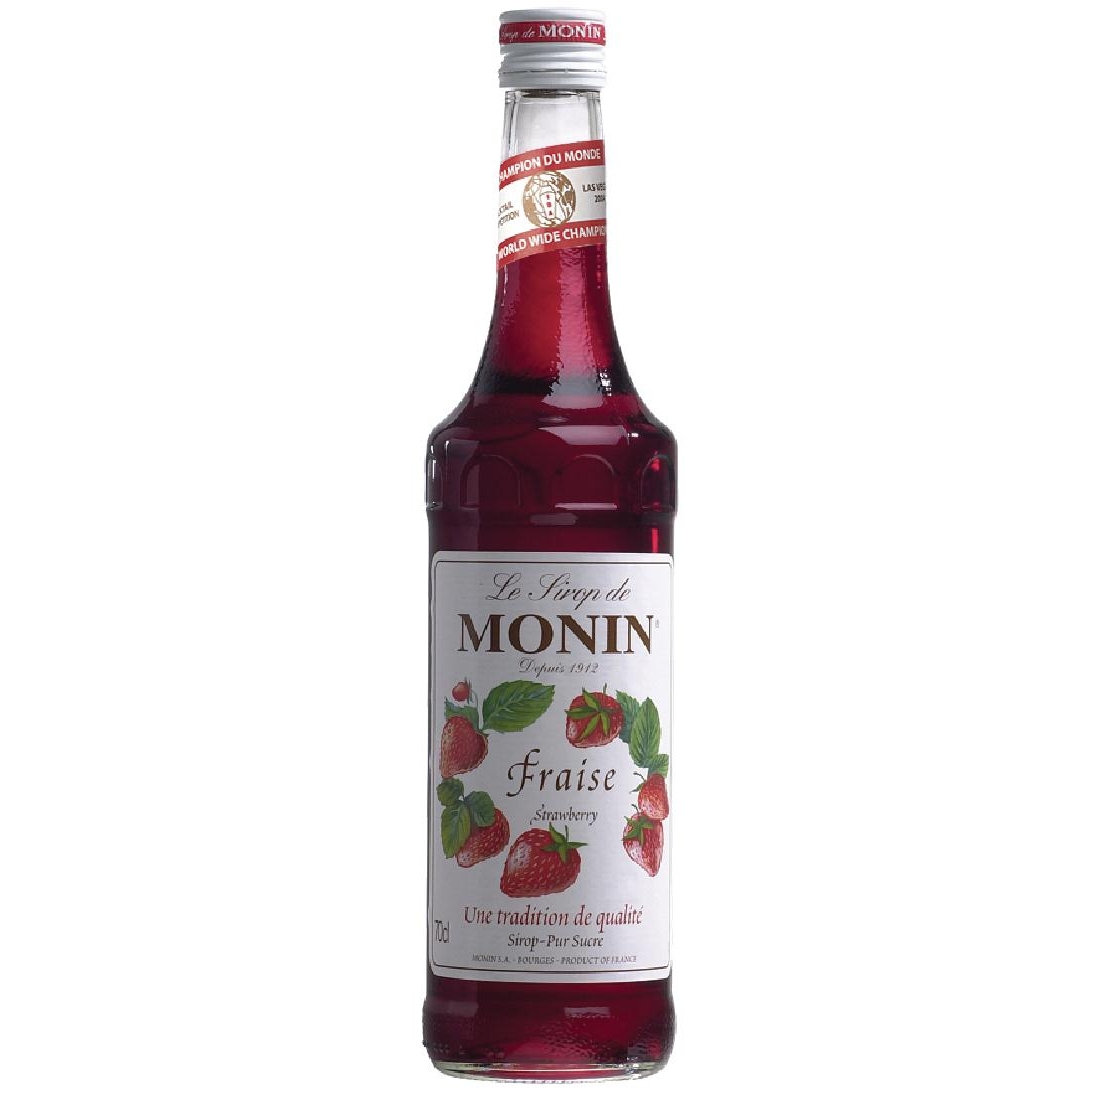 Monin Syrup Strawberry